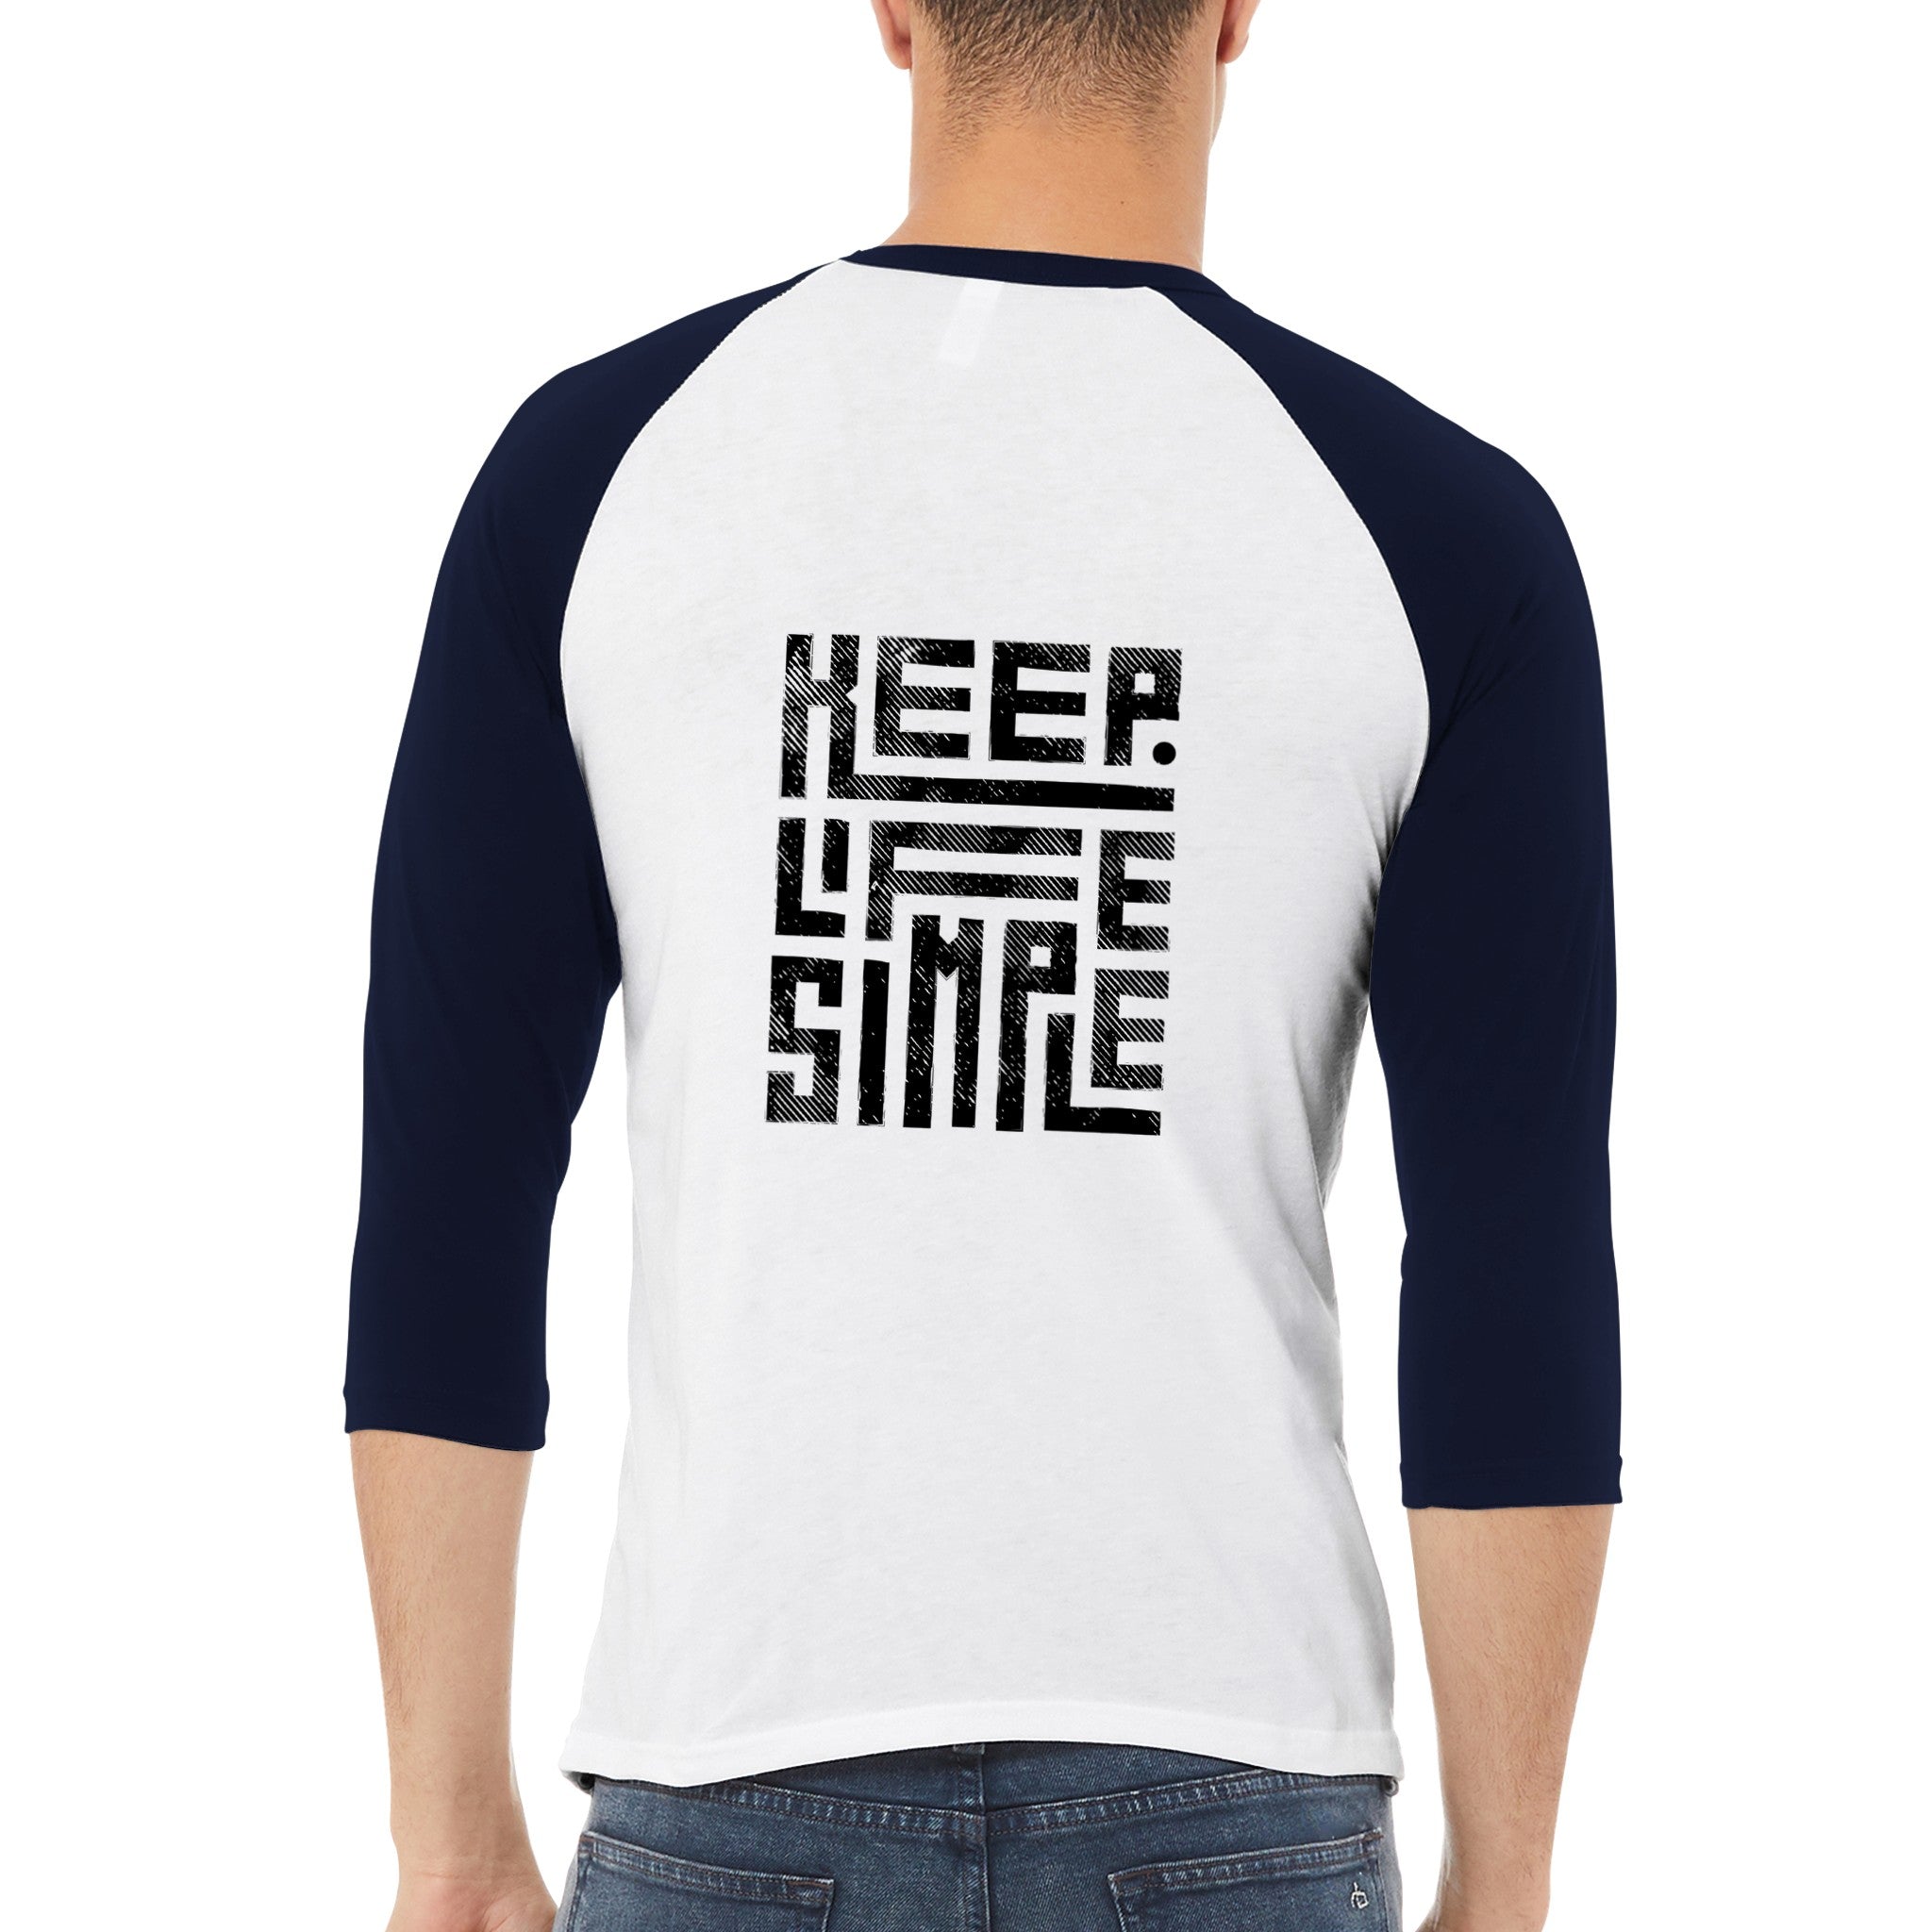 Keep Life Simple - Unisex 3/4 sleeve Raglan T-shirt by Pink Clouds